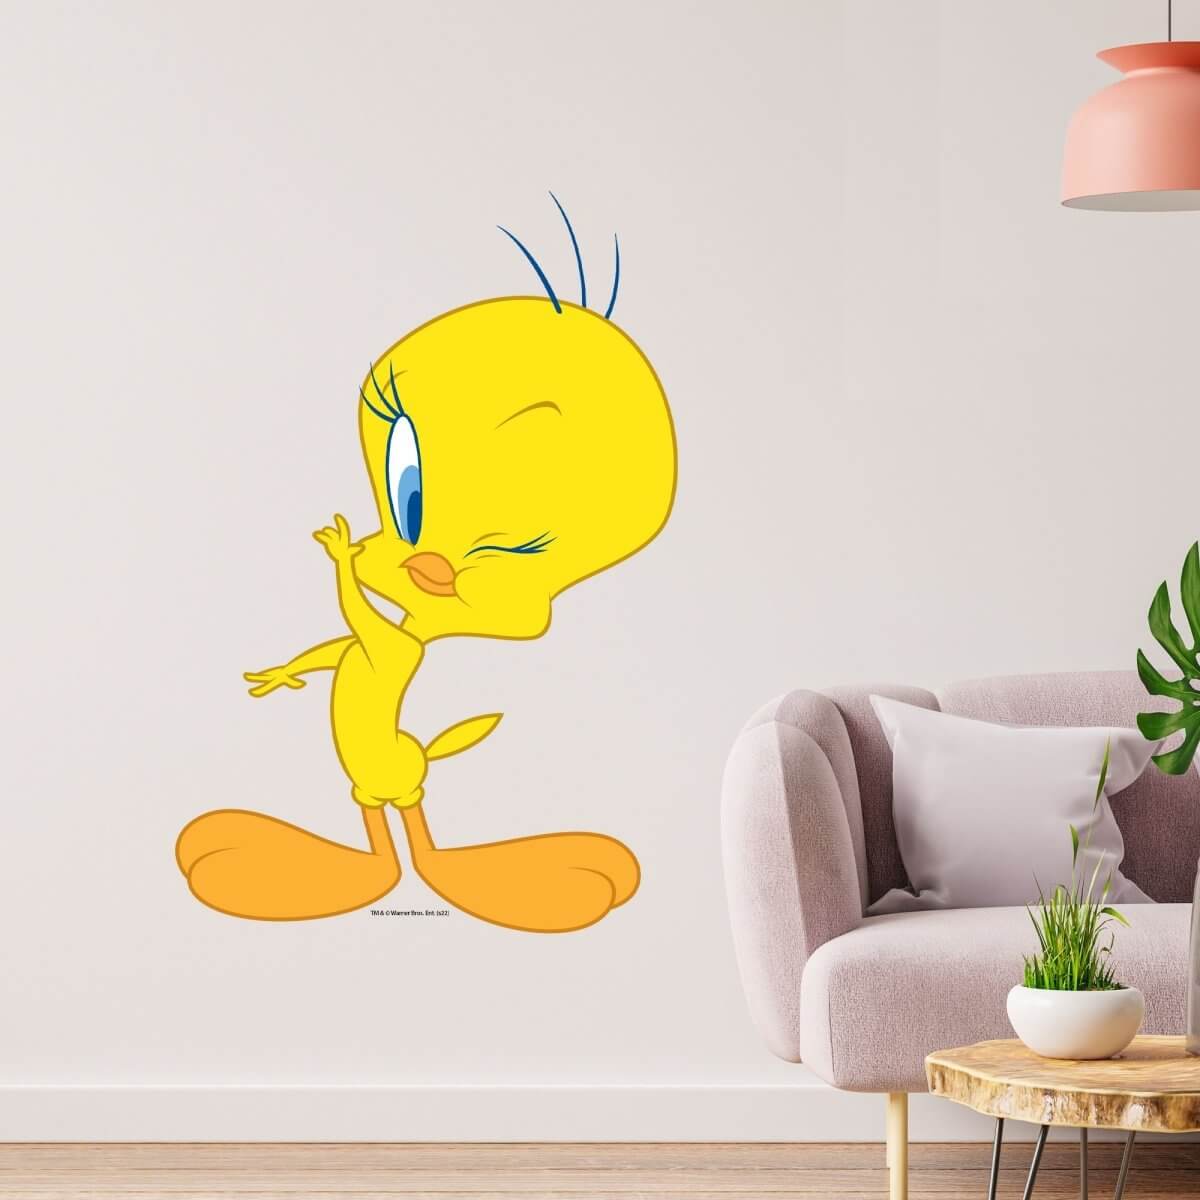 Kismet Decals Looney Tunes Tweety Bird Devious Licensed Wall Sticker - Easy DIY Home & Kids Room Decor Wall Decal Art - Kismet Decals